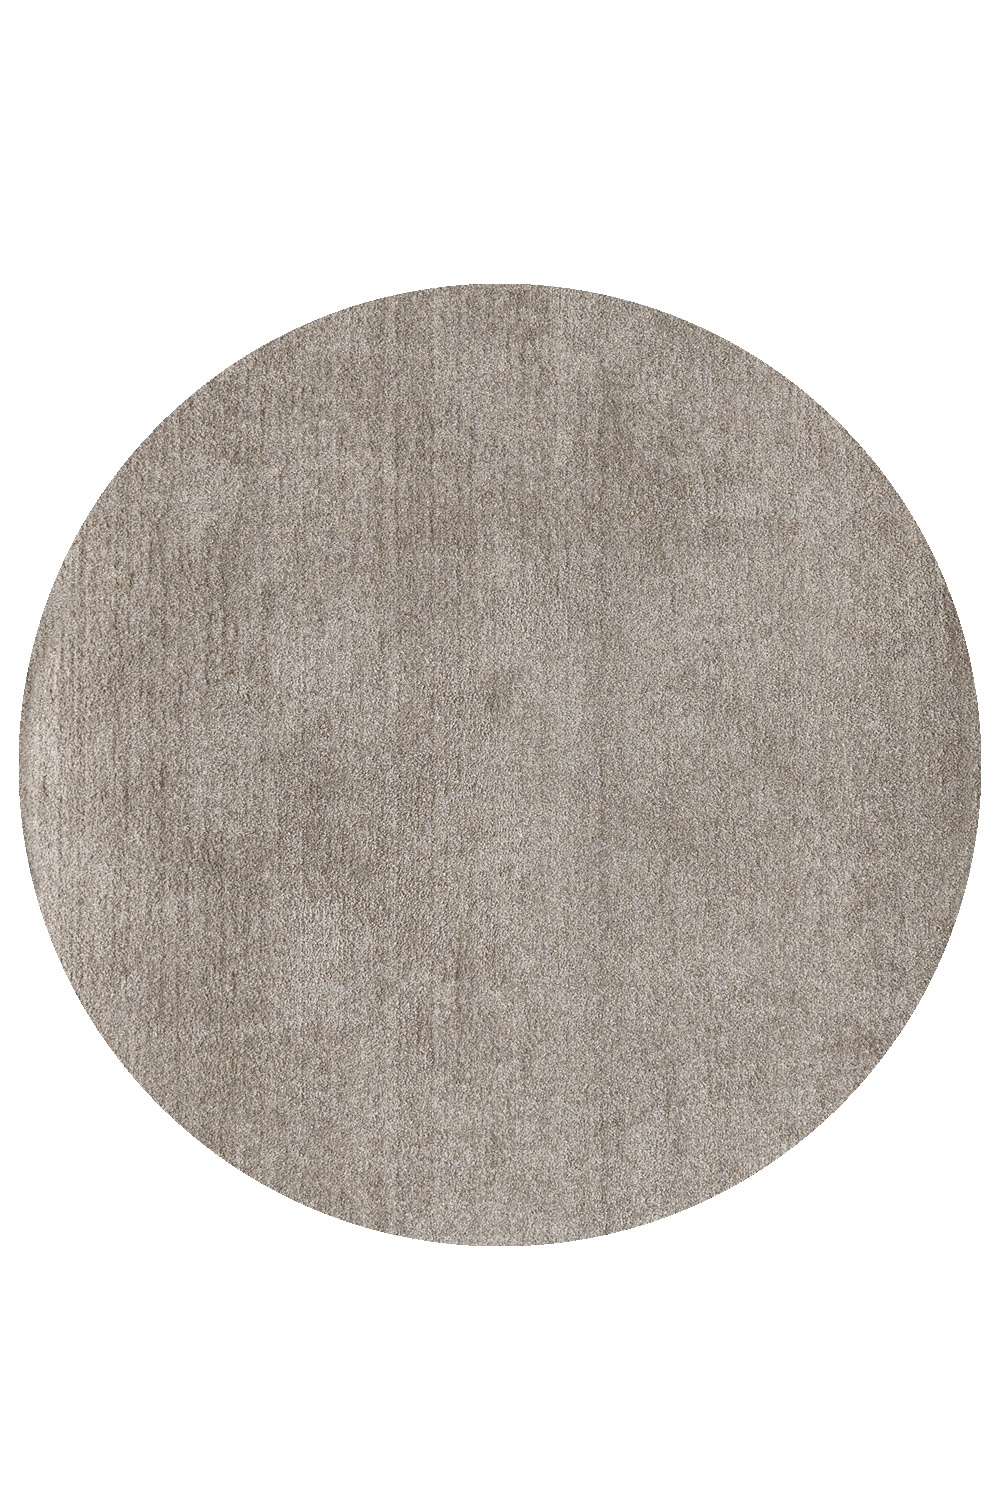 Kusový koberec Labrador 050 Beige - kruh Ø 160 cm